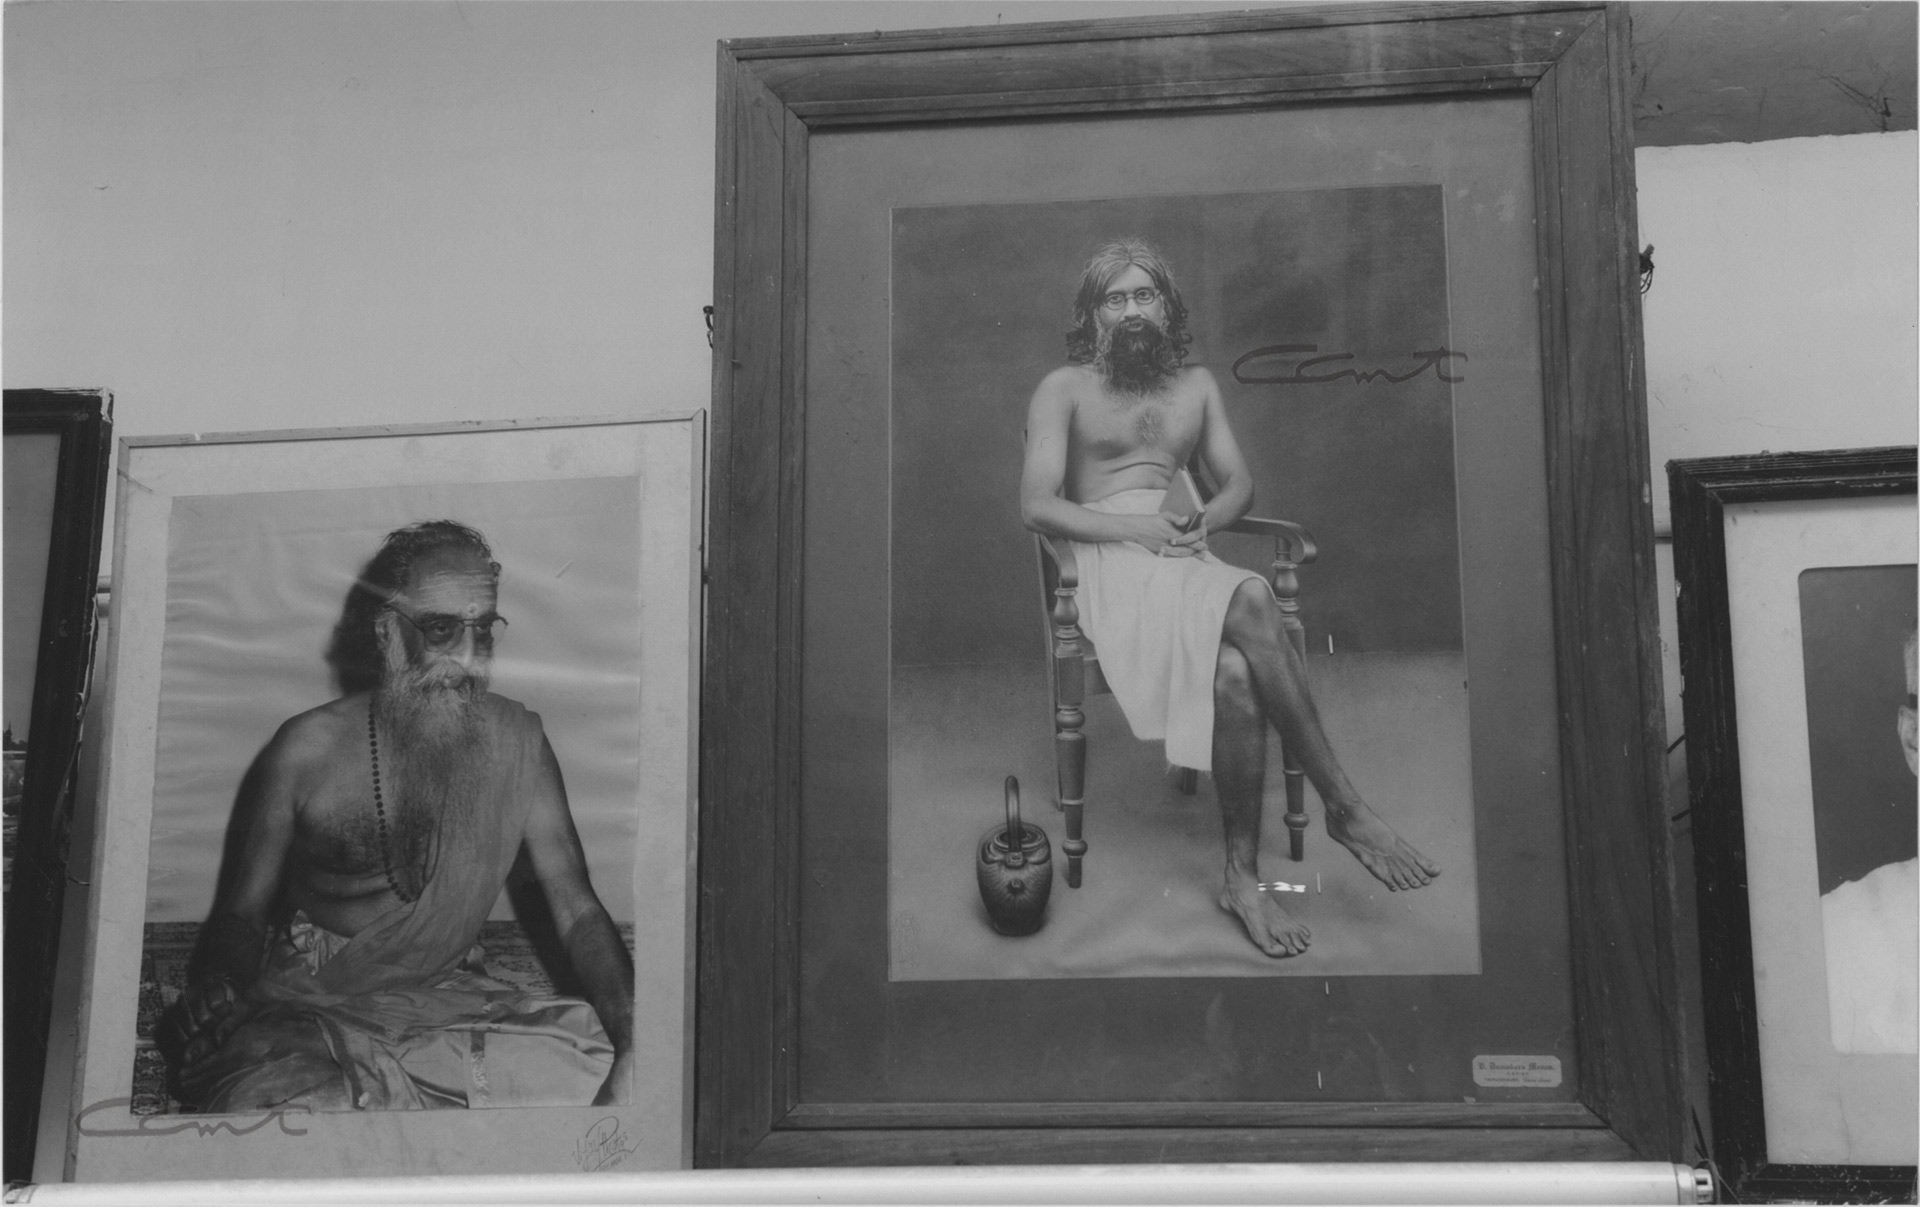 Swami Chinmayananda's photograph adorns the walls of Vivekodayam Boys' High School